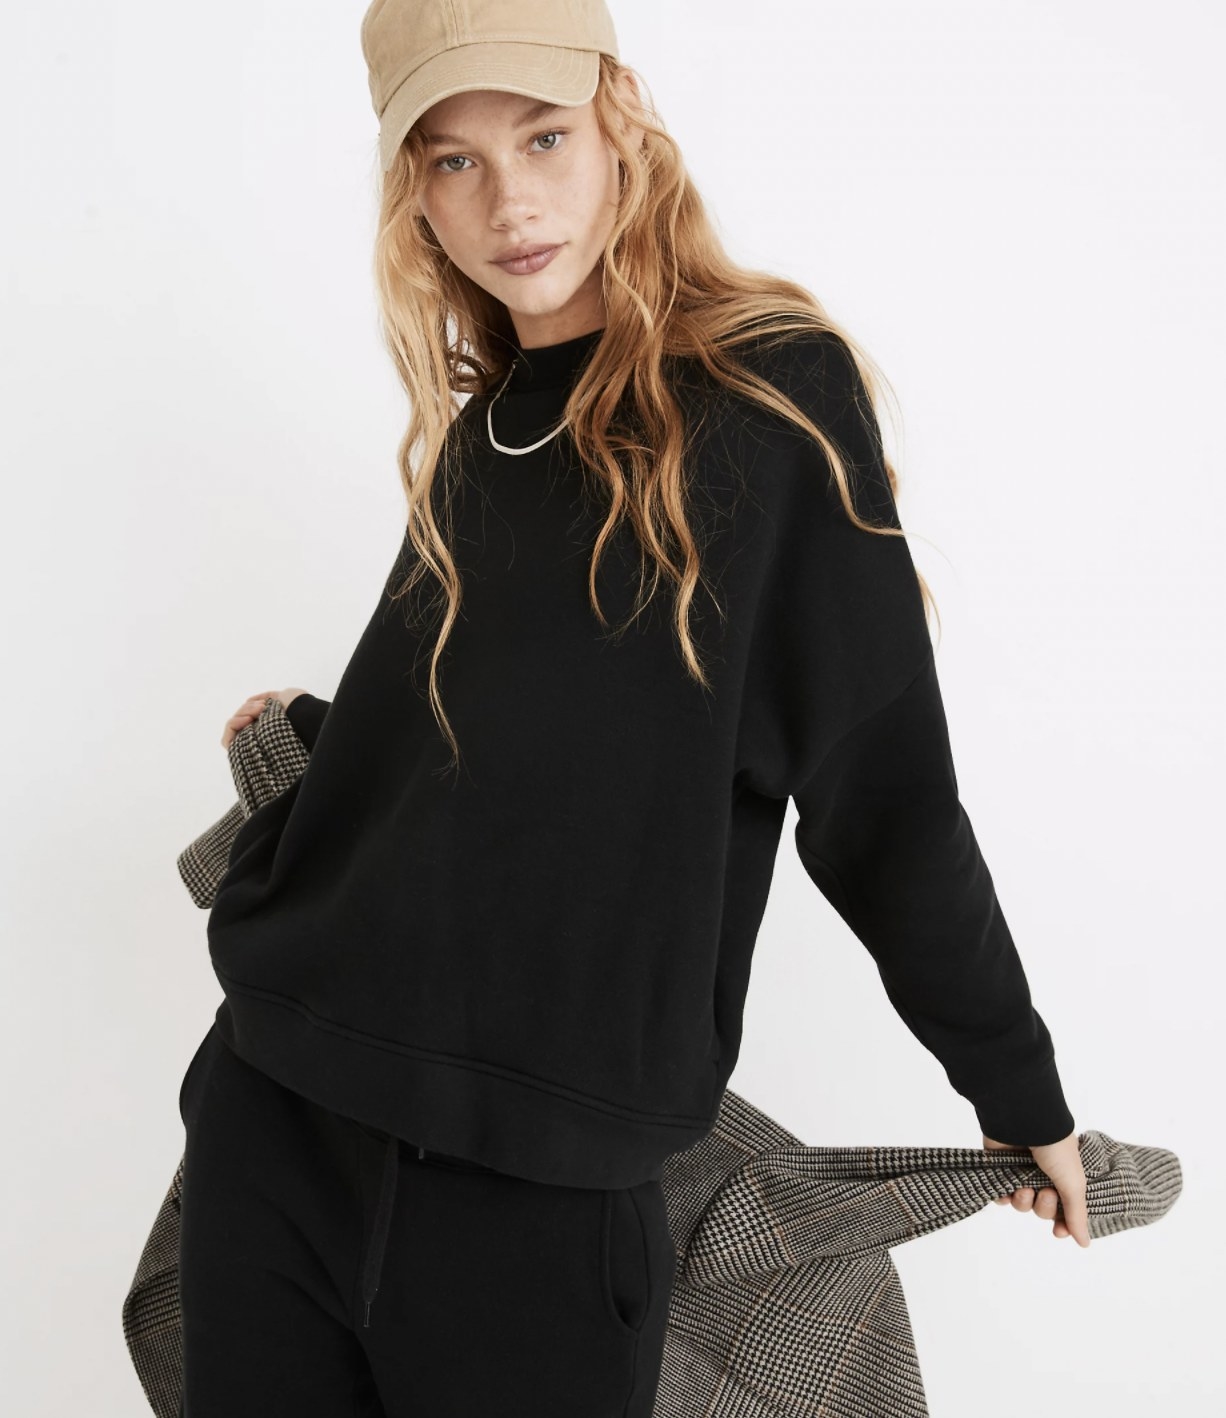 Model wearing the black sweater